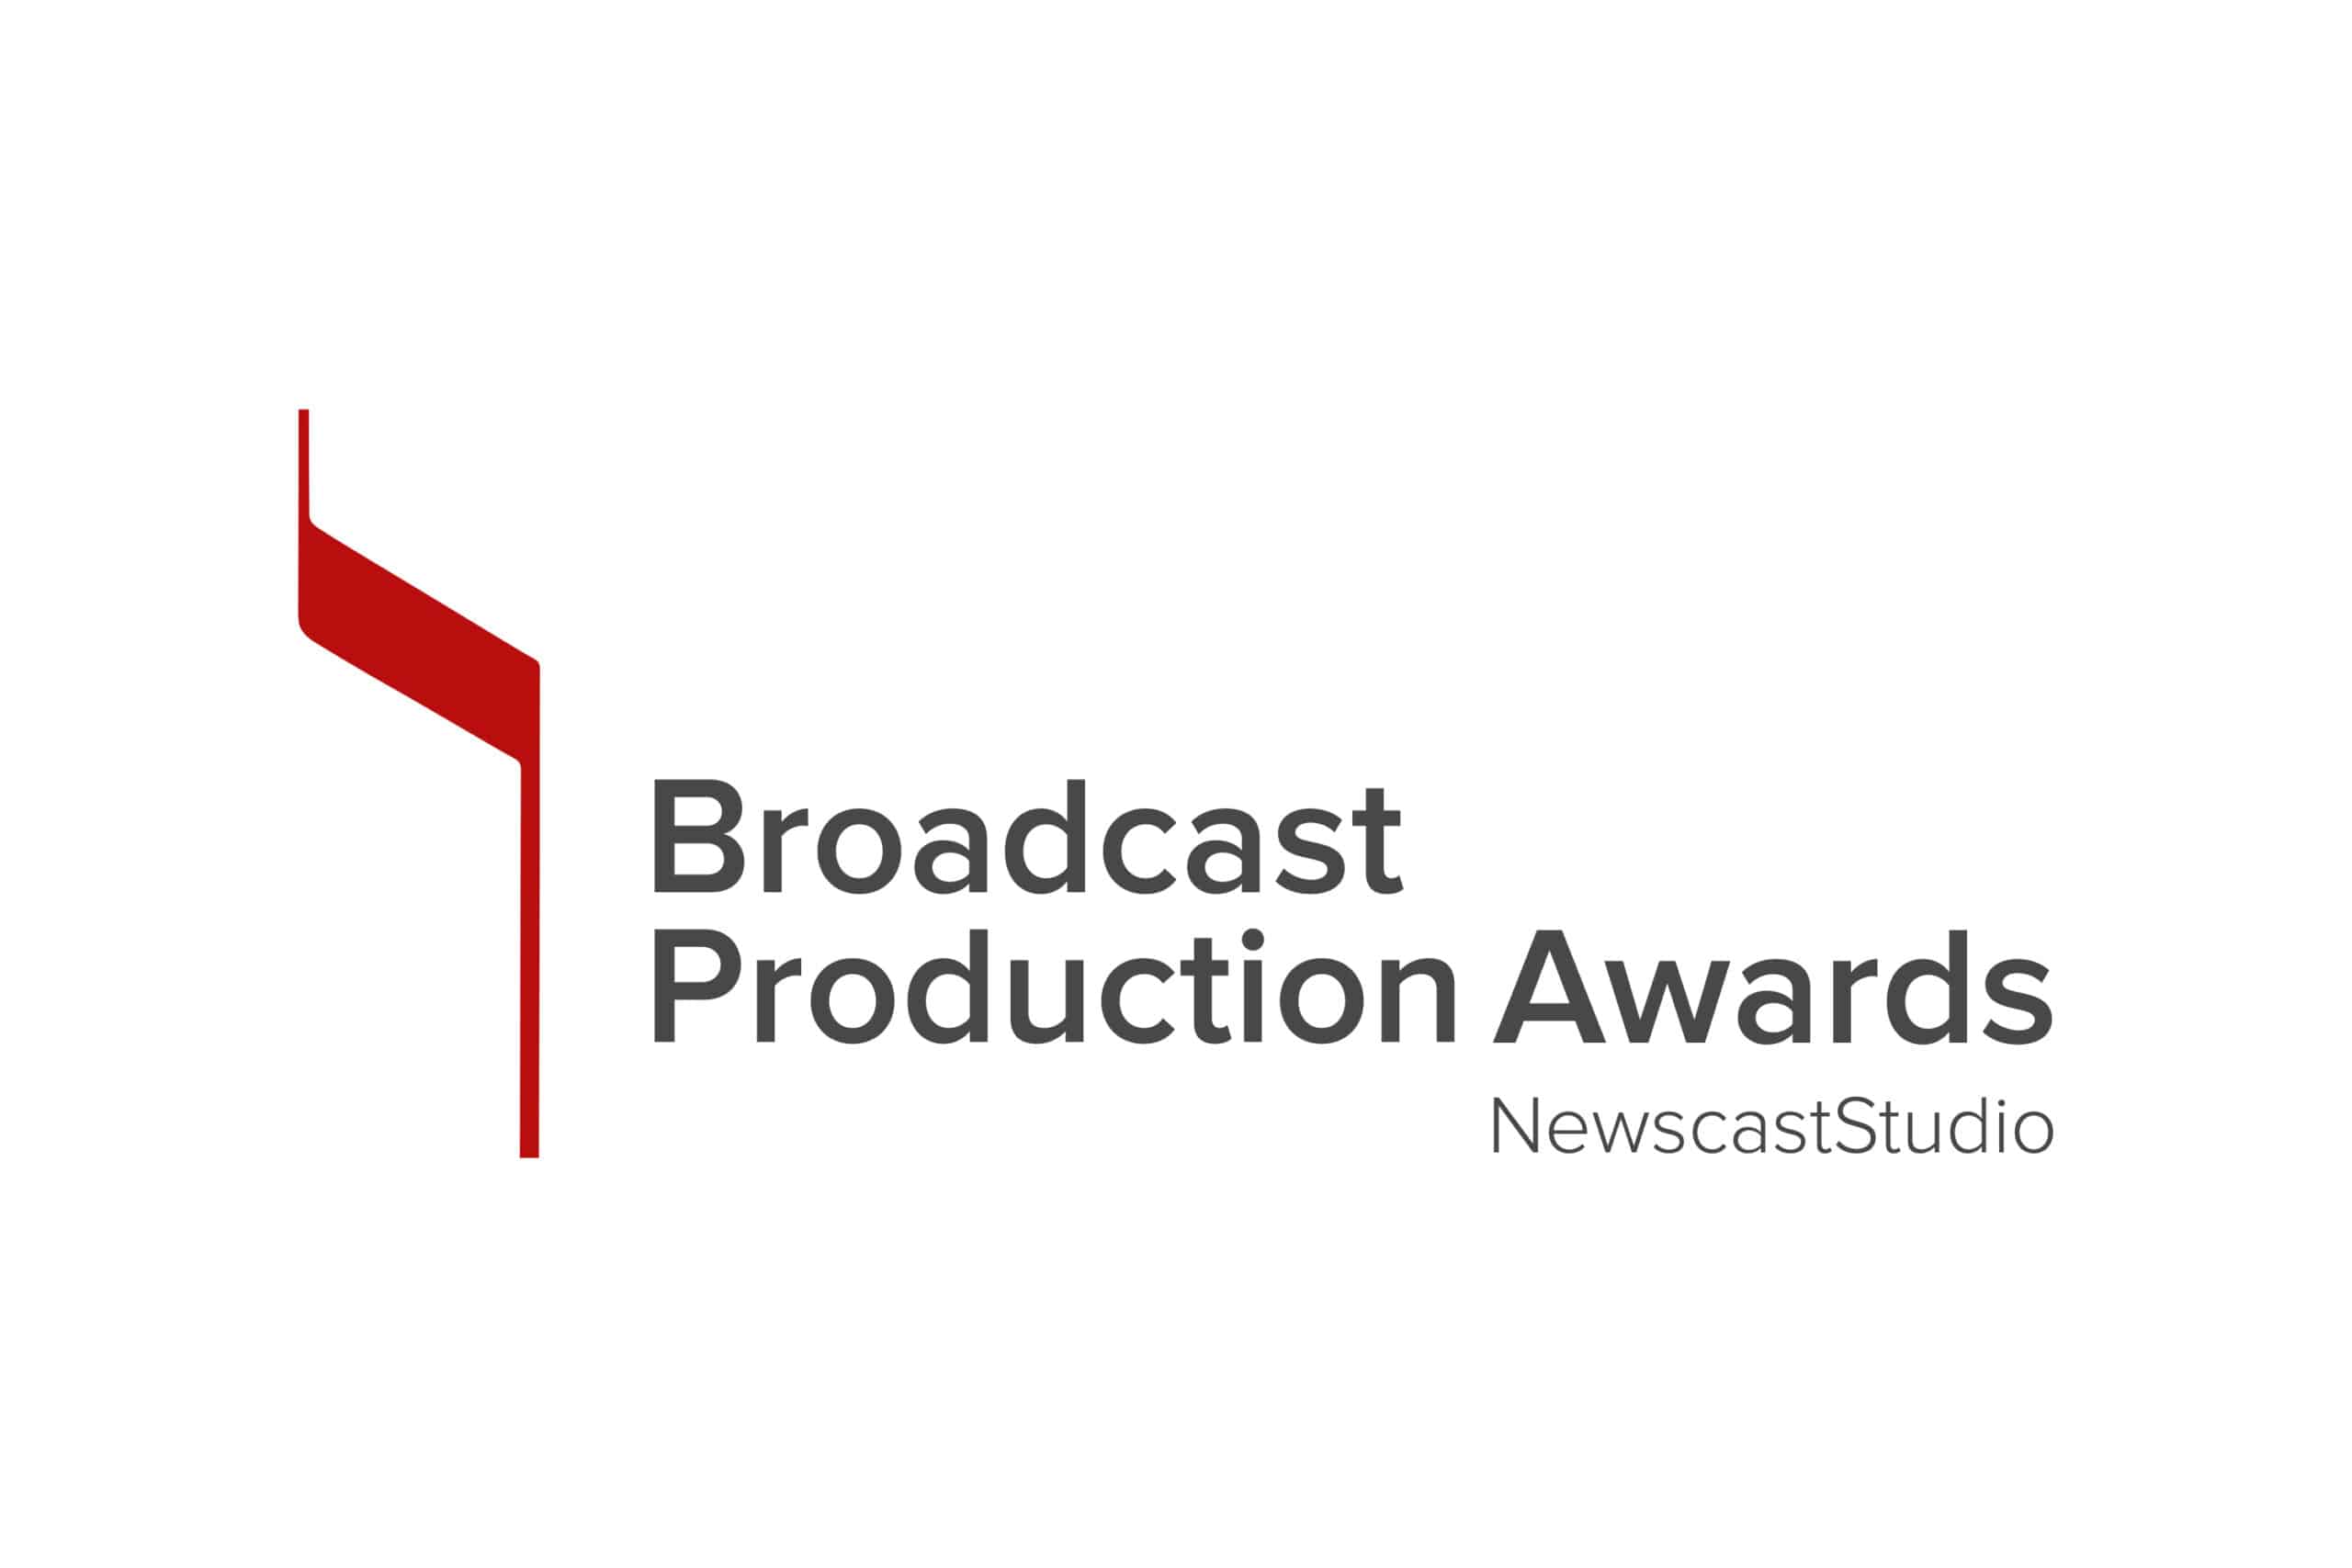 NewcastStudio Broadcast Production Awards BPA 2019